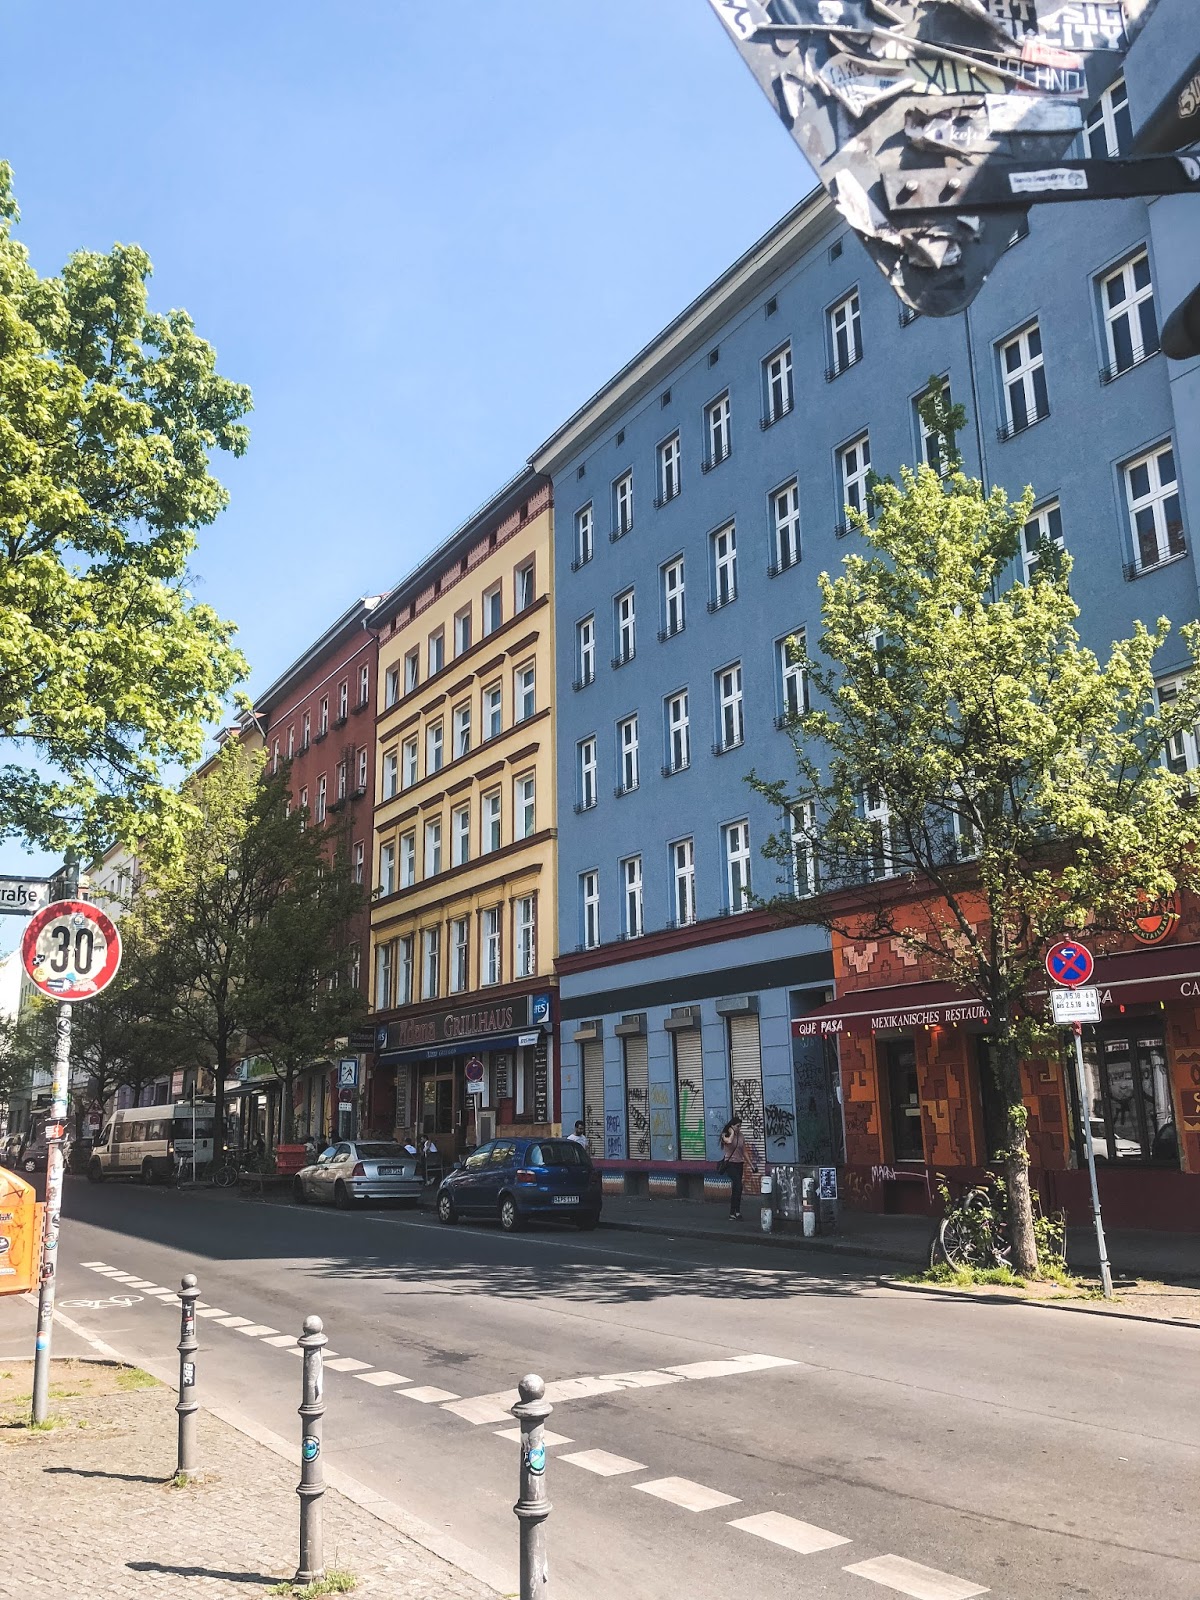 Berlin city guide venus is naive